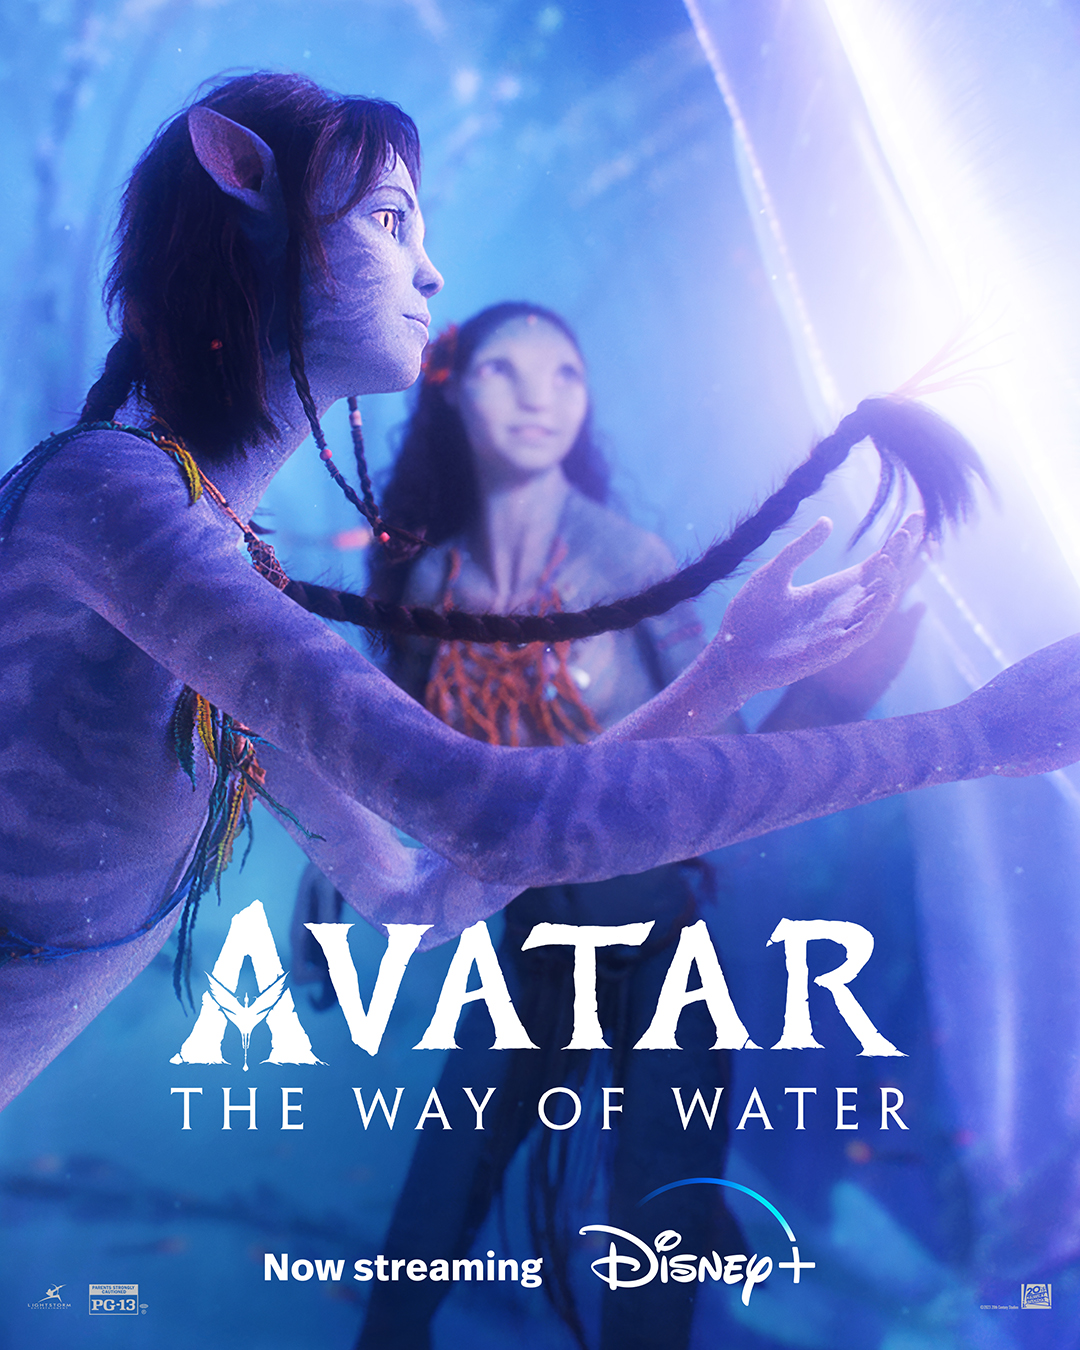 Beast Kingdom DS-132 Disney Pixar Avatar: The Way Of Water